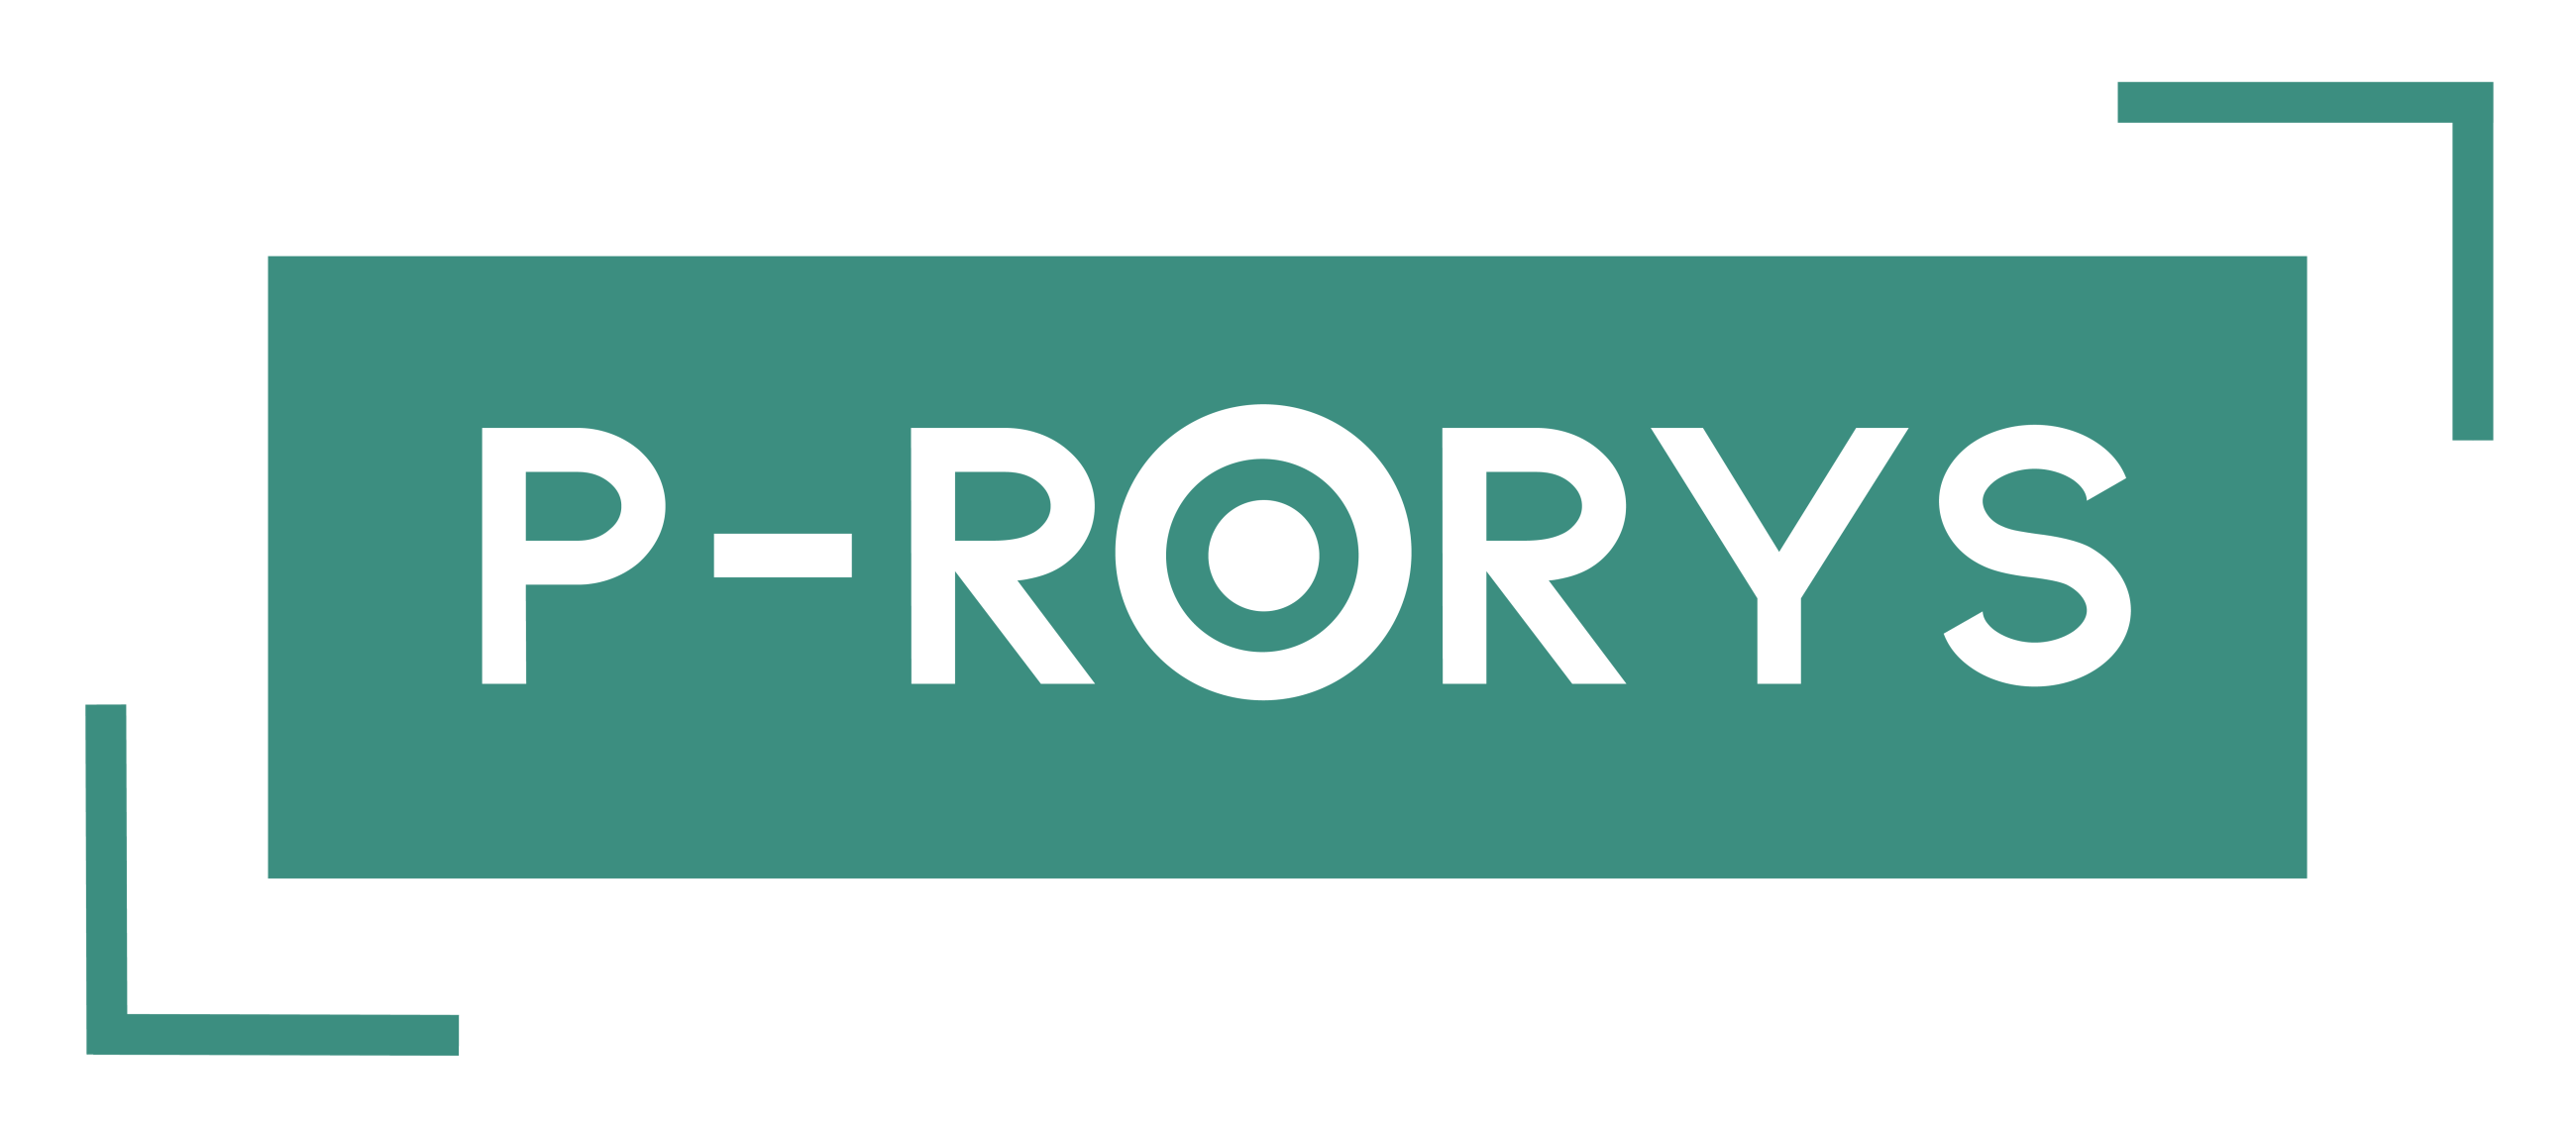 P-Rorys